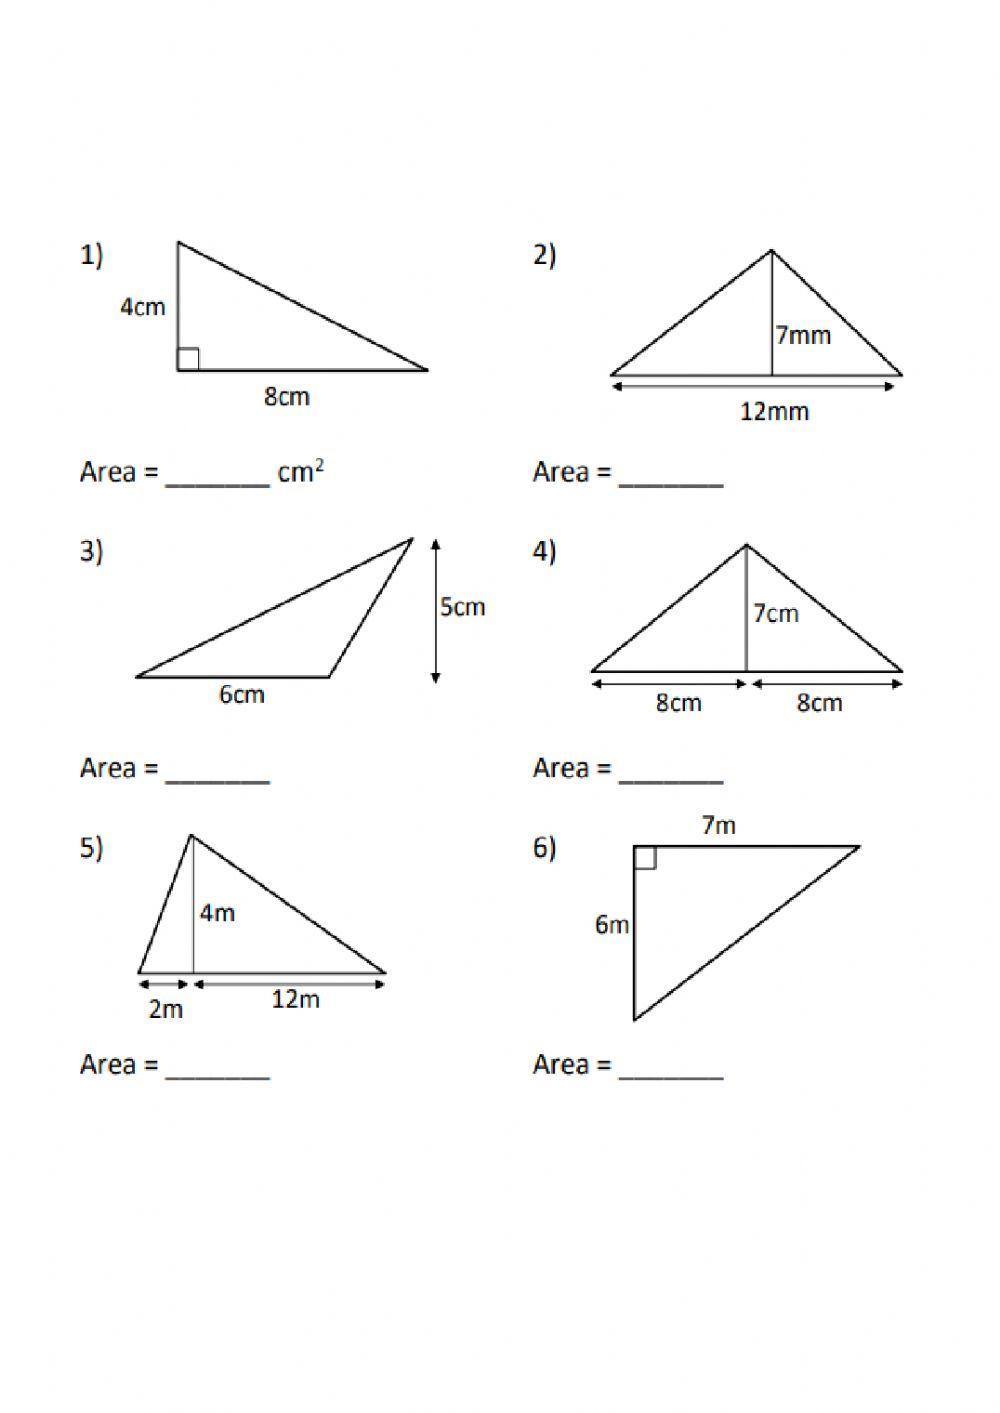 Área del triángulo